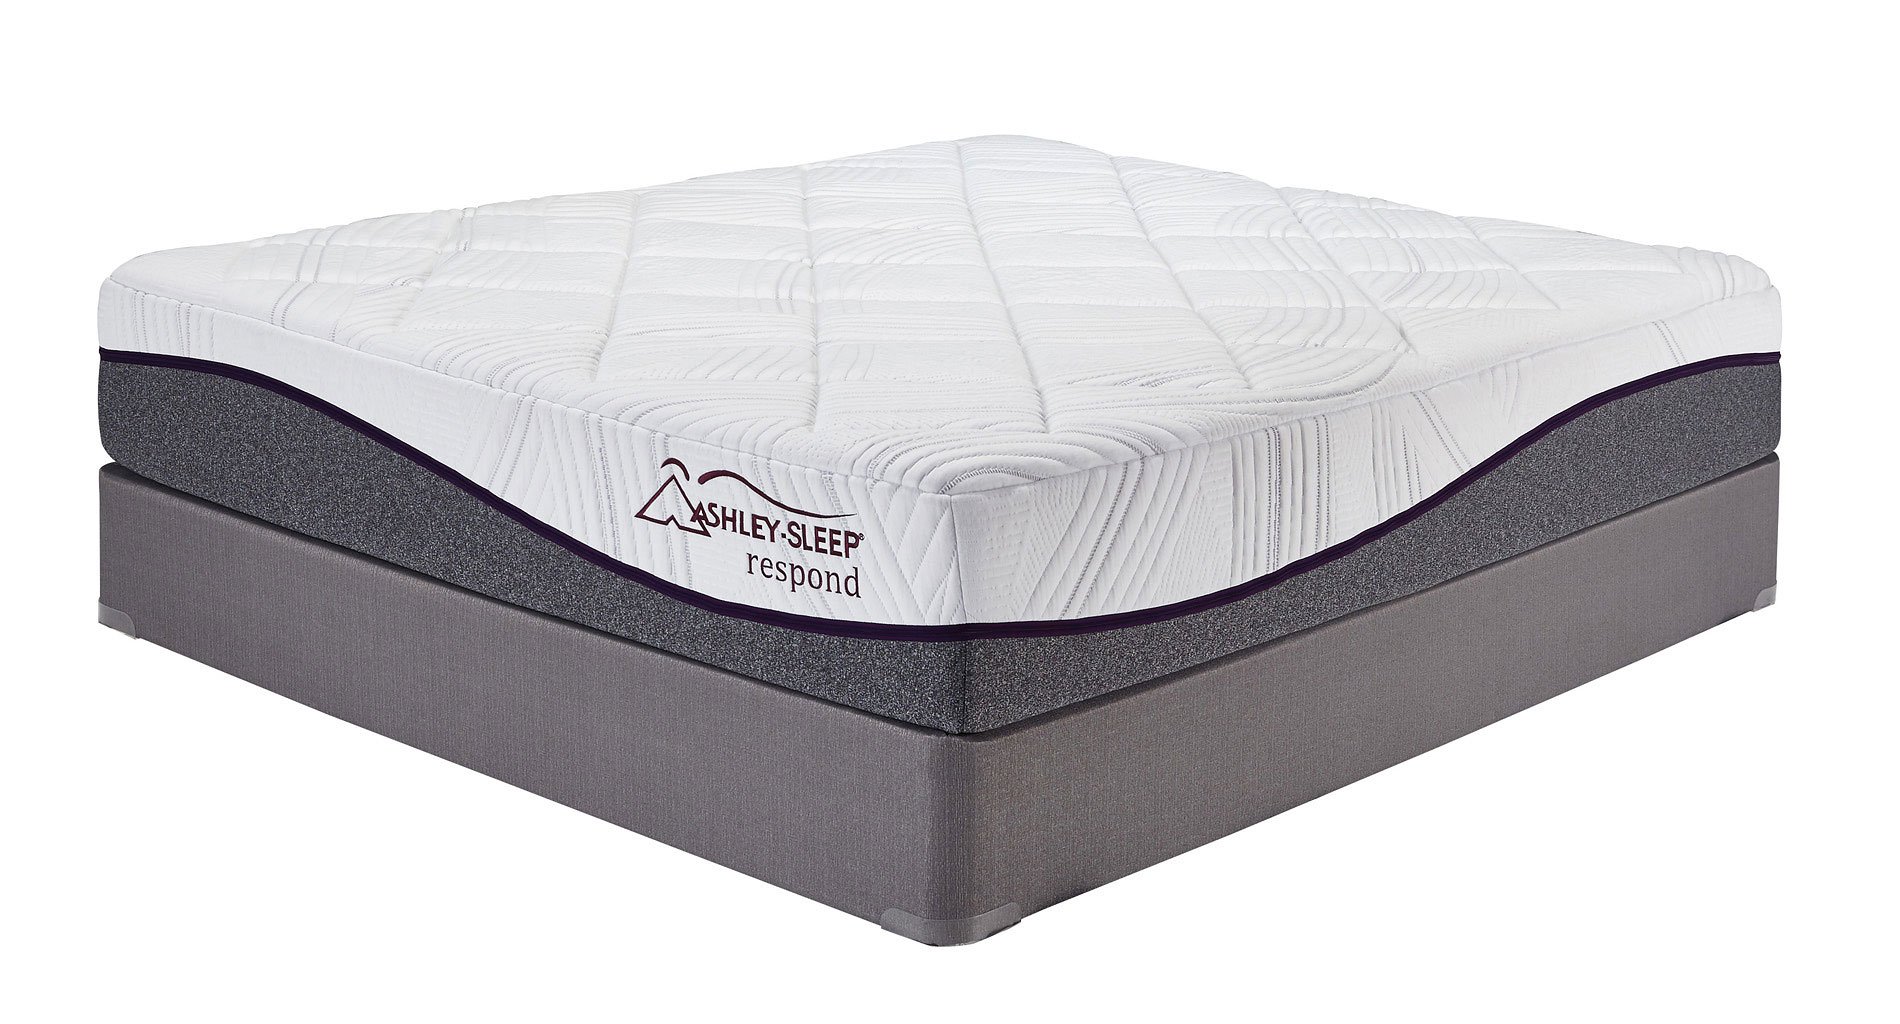 12 inch memory foam mattress topper